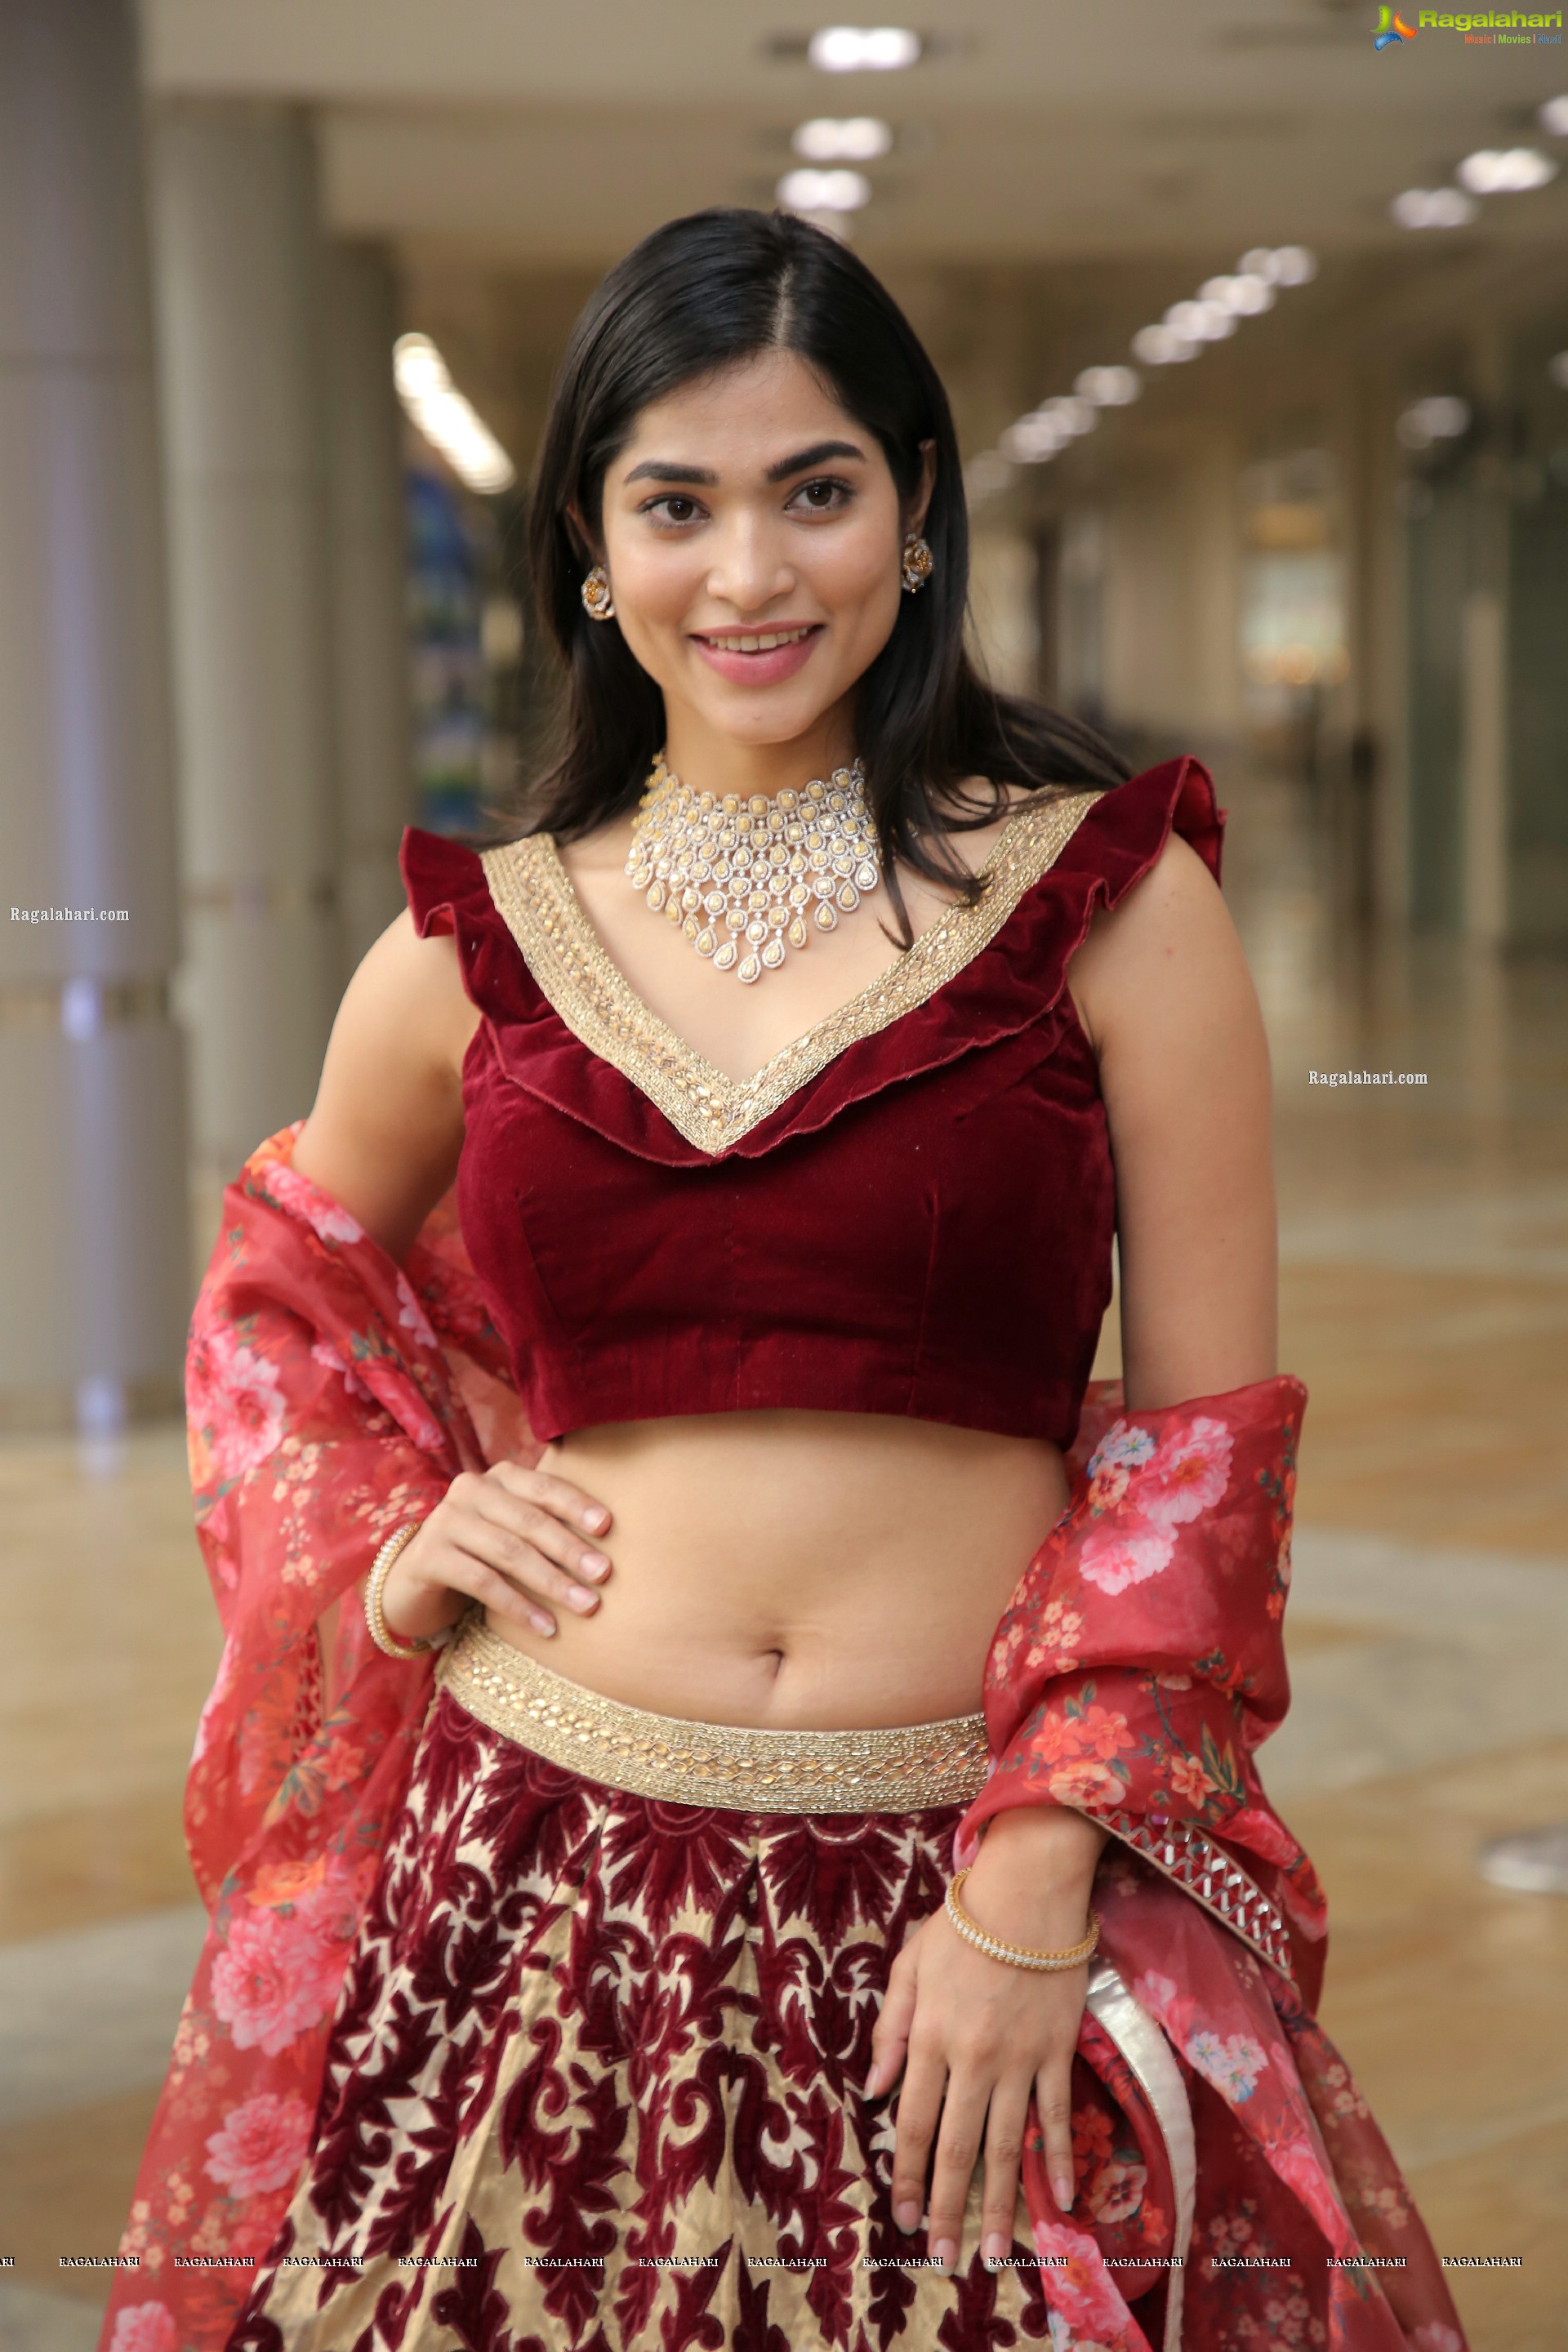 Subhashree Rayaguru in Maroon Embellished Lehenga Choli, HD Photo Gallery